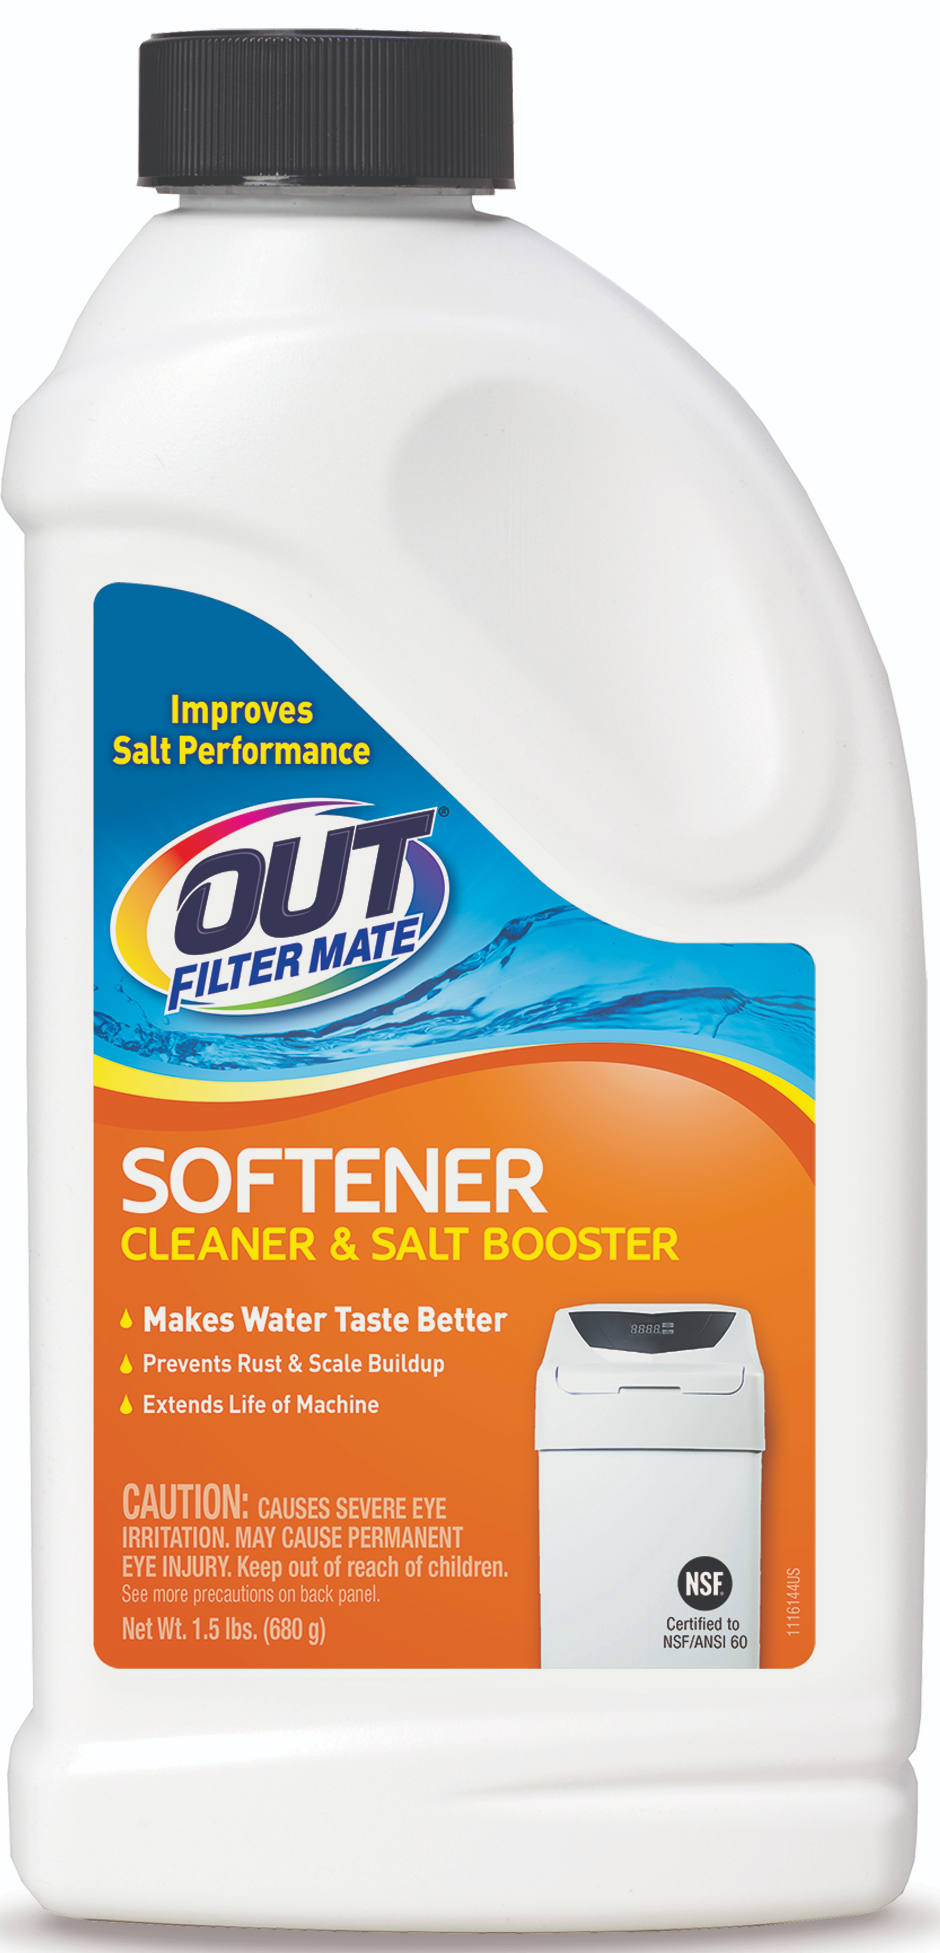 E Pallet - Filter-Mate TO06N Softener Cleaner and Salt Booster Booster, 24  fl oz